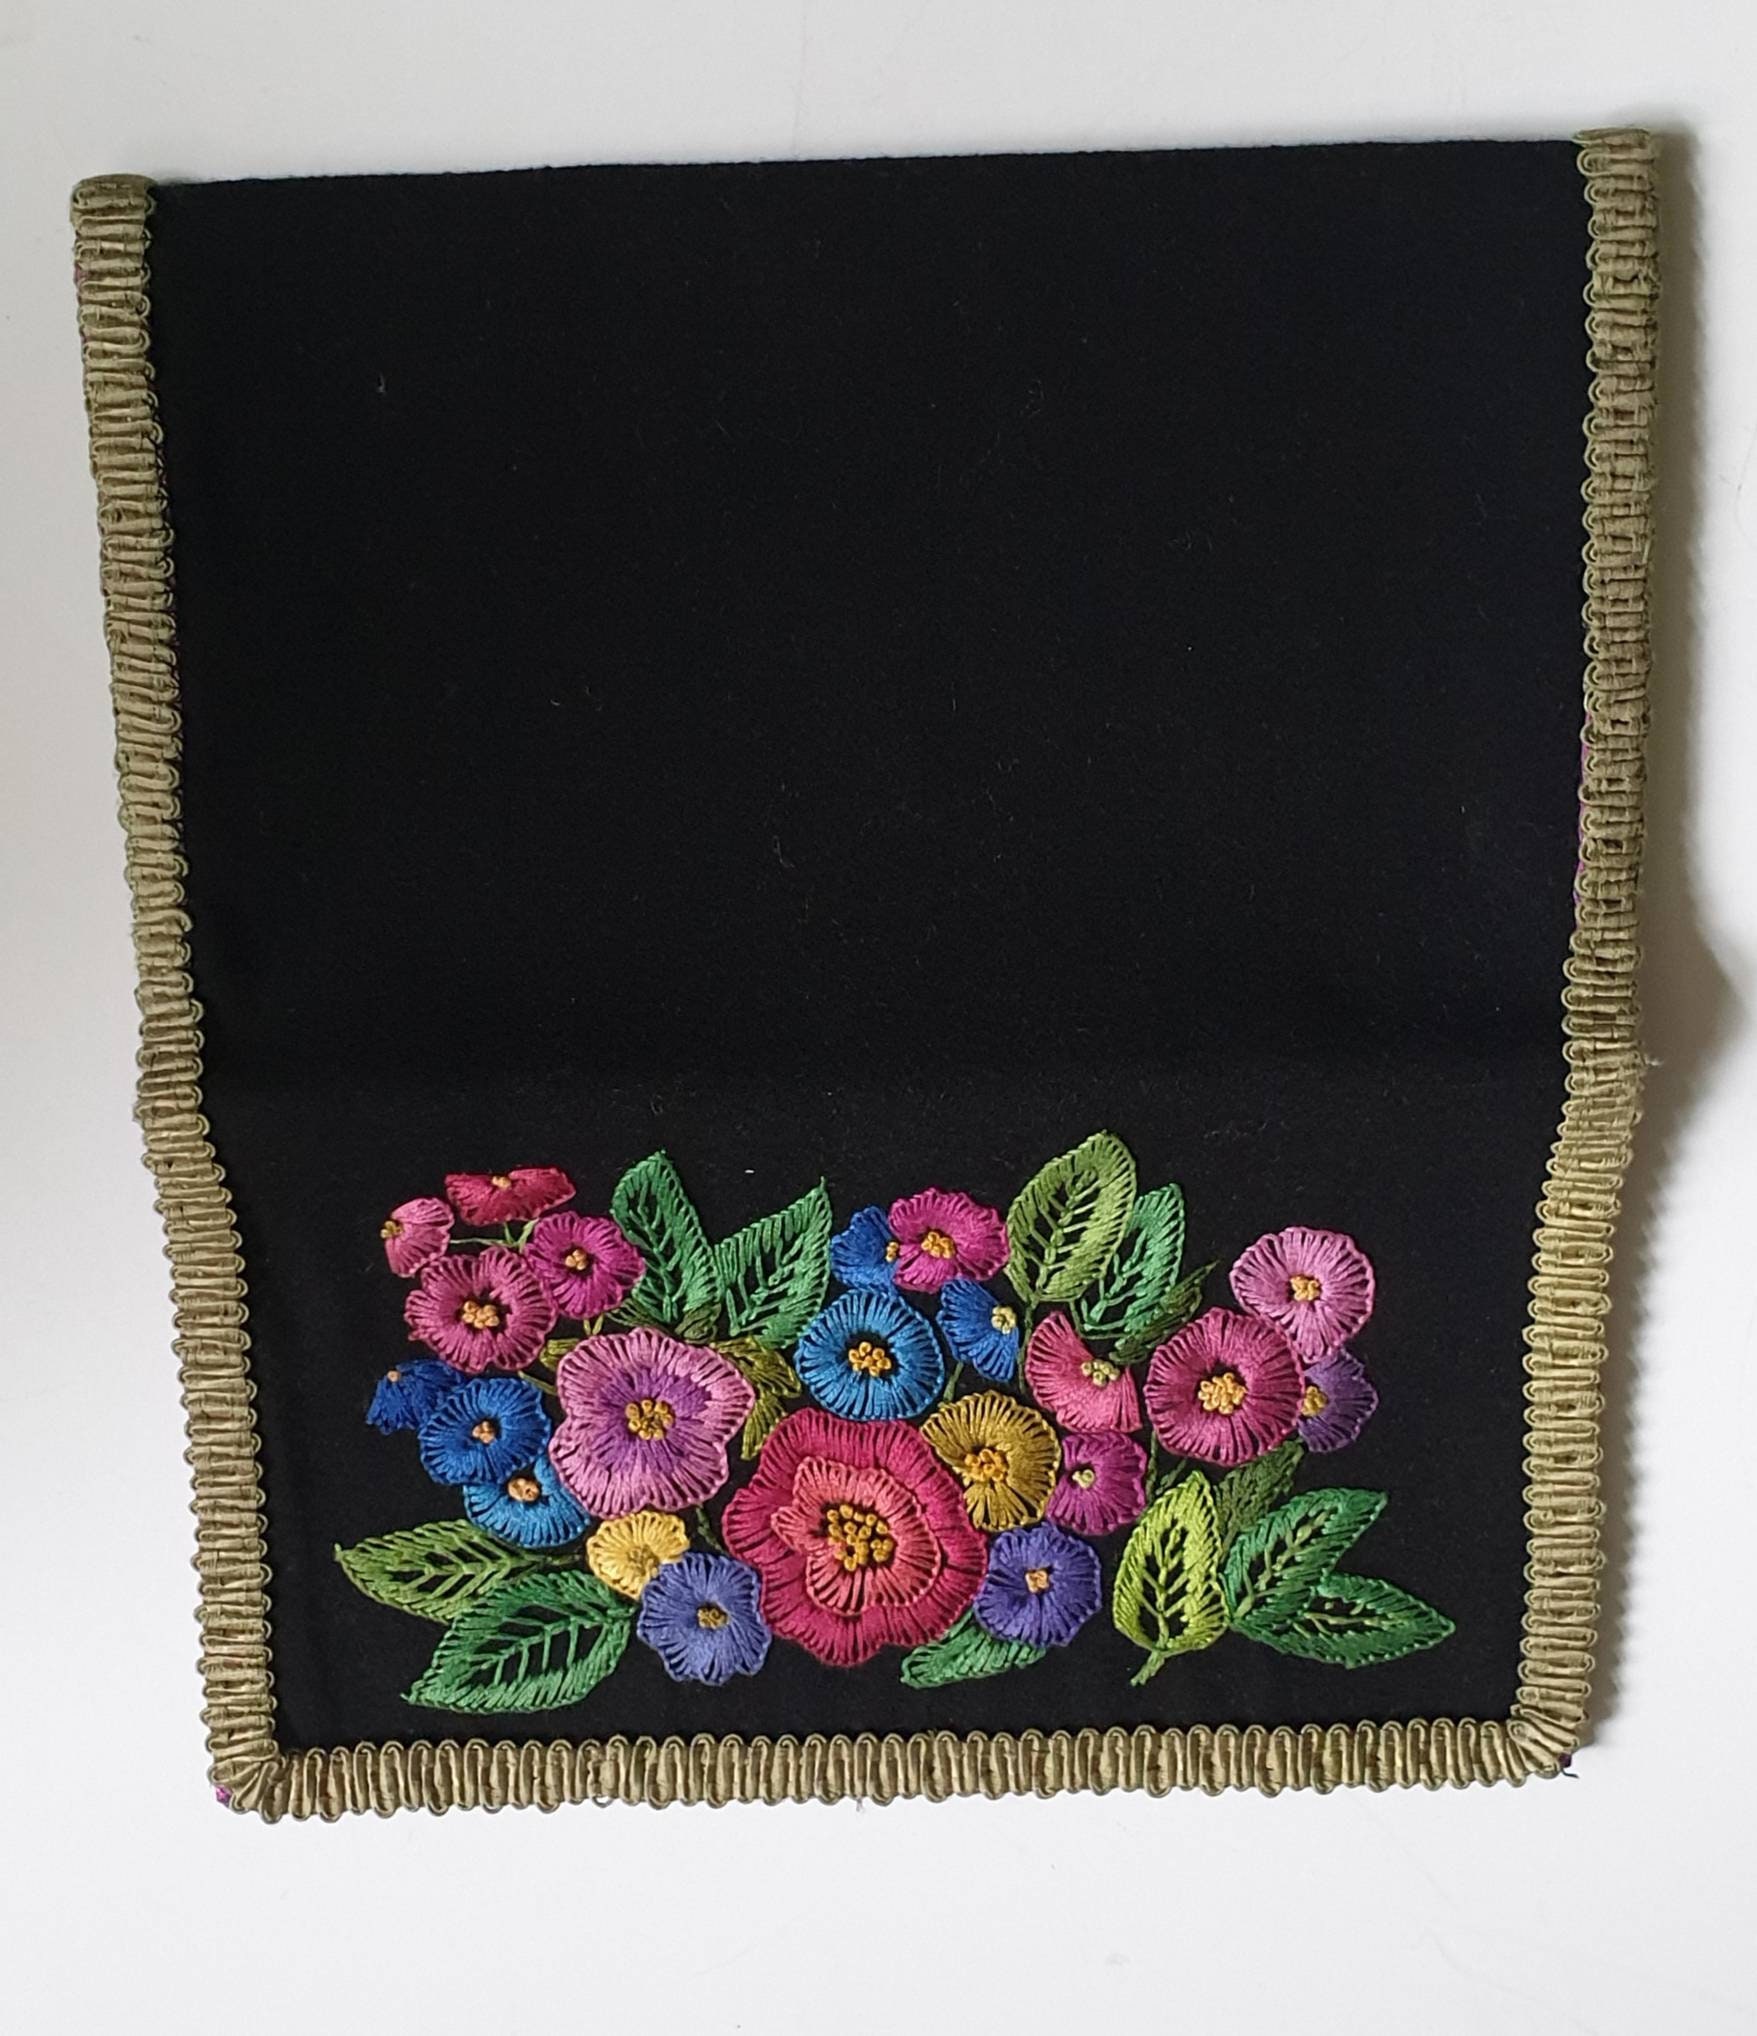 Thirties Embroidered Clutch Bag Vintage Floral Pattern - Etsy UK